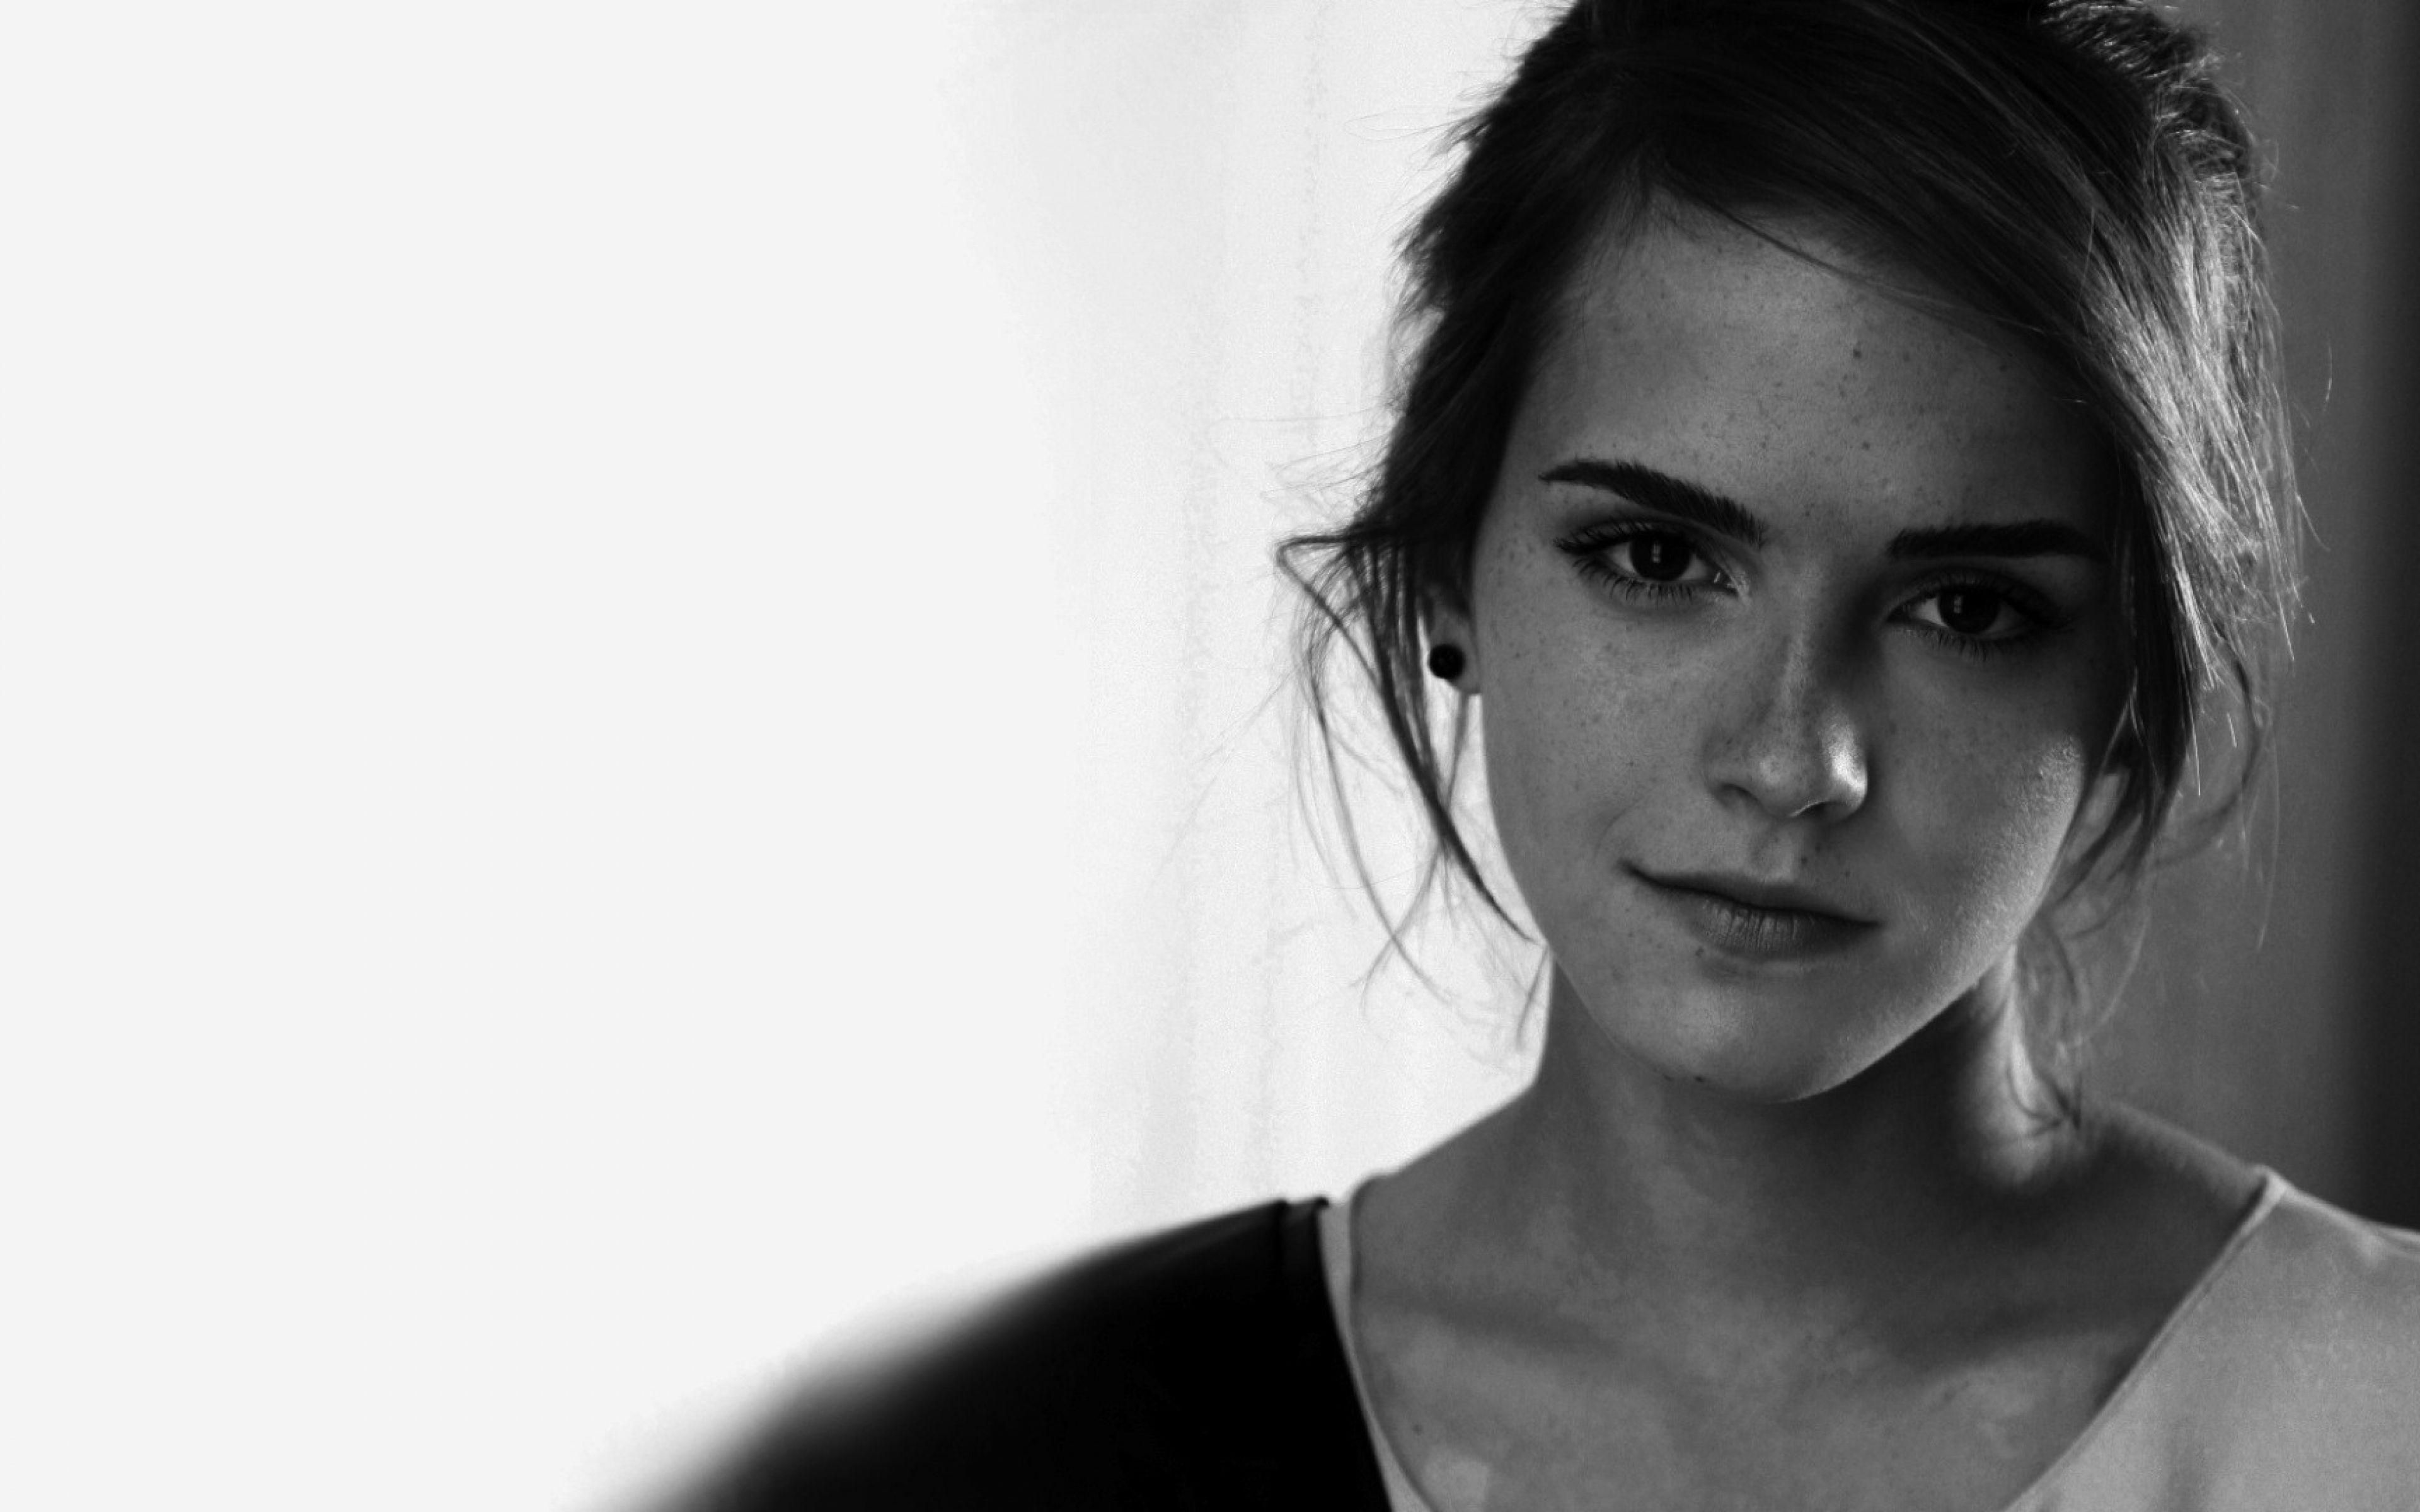 4k Emma Watson Wallpapers - Wallpaper Cave